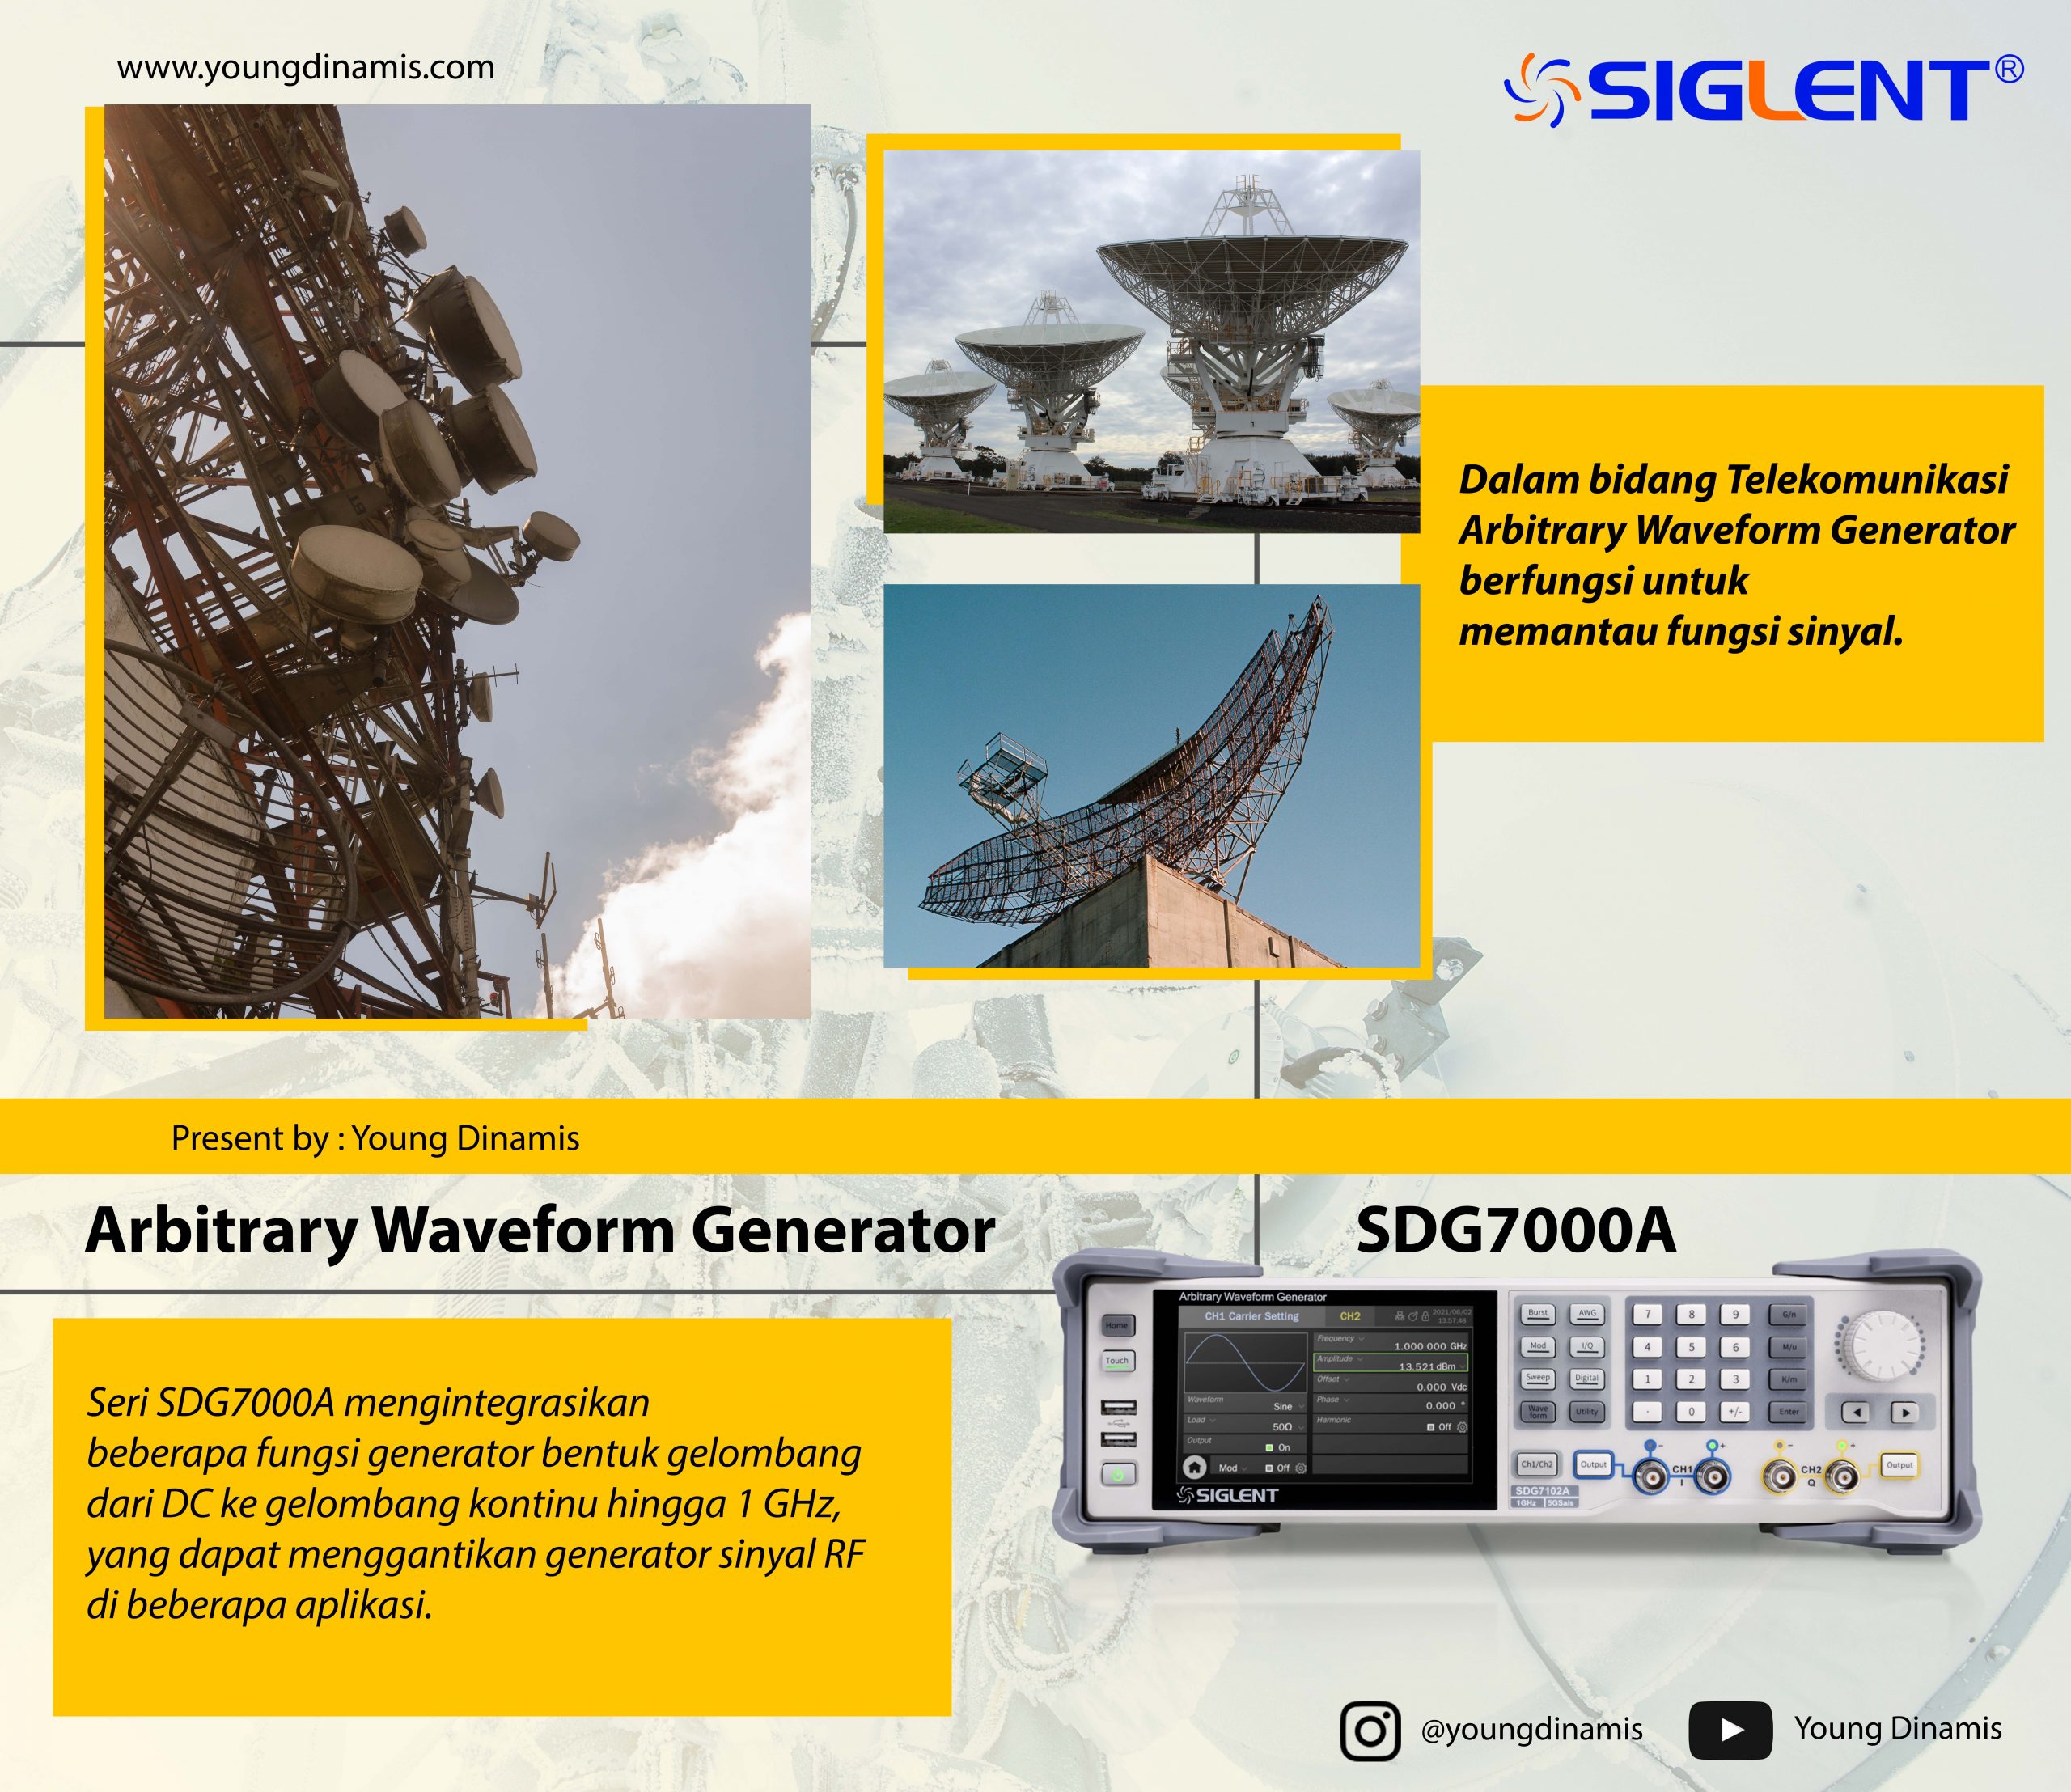 SDG7000A Arbitrary Waveform Generator